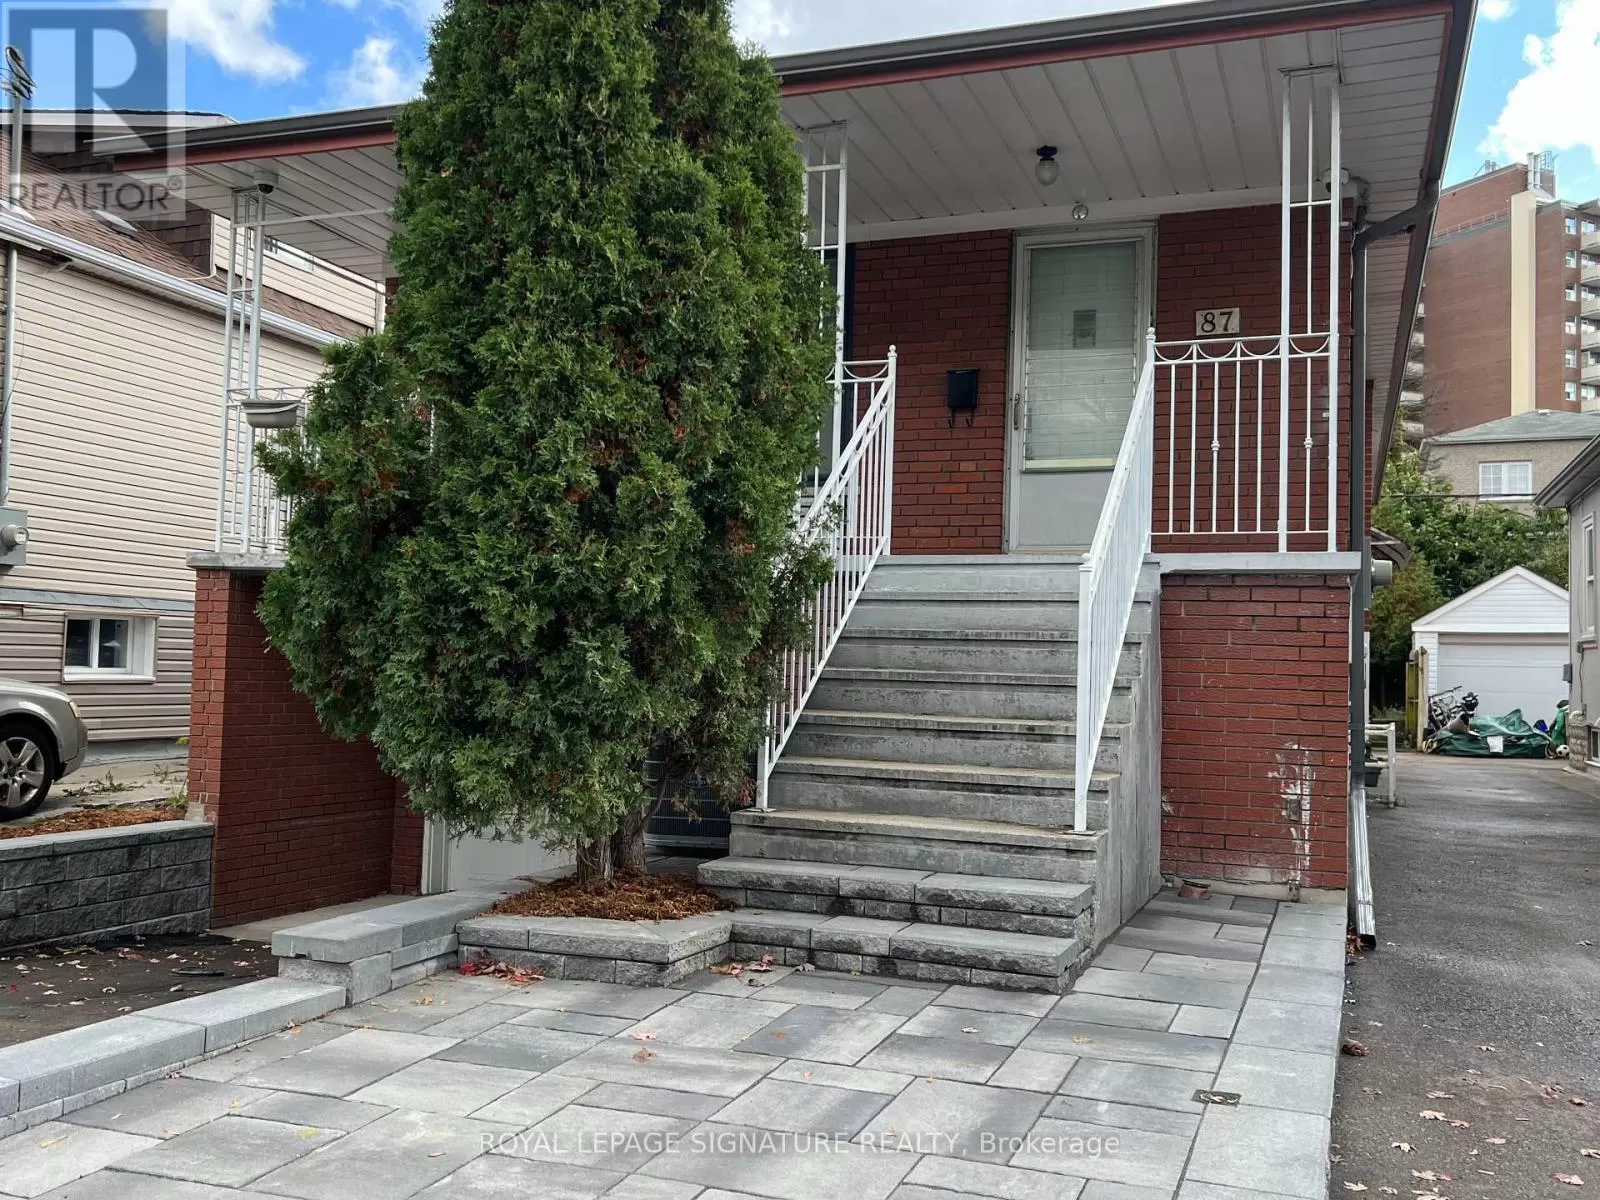 House for rent: Lower - 87 Cordella Avenue, Toronto, Ontario M6N 2J8